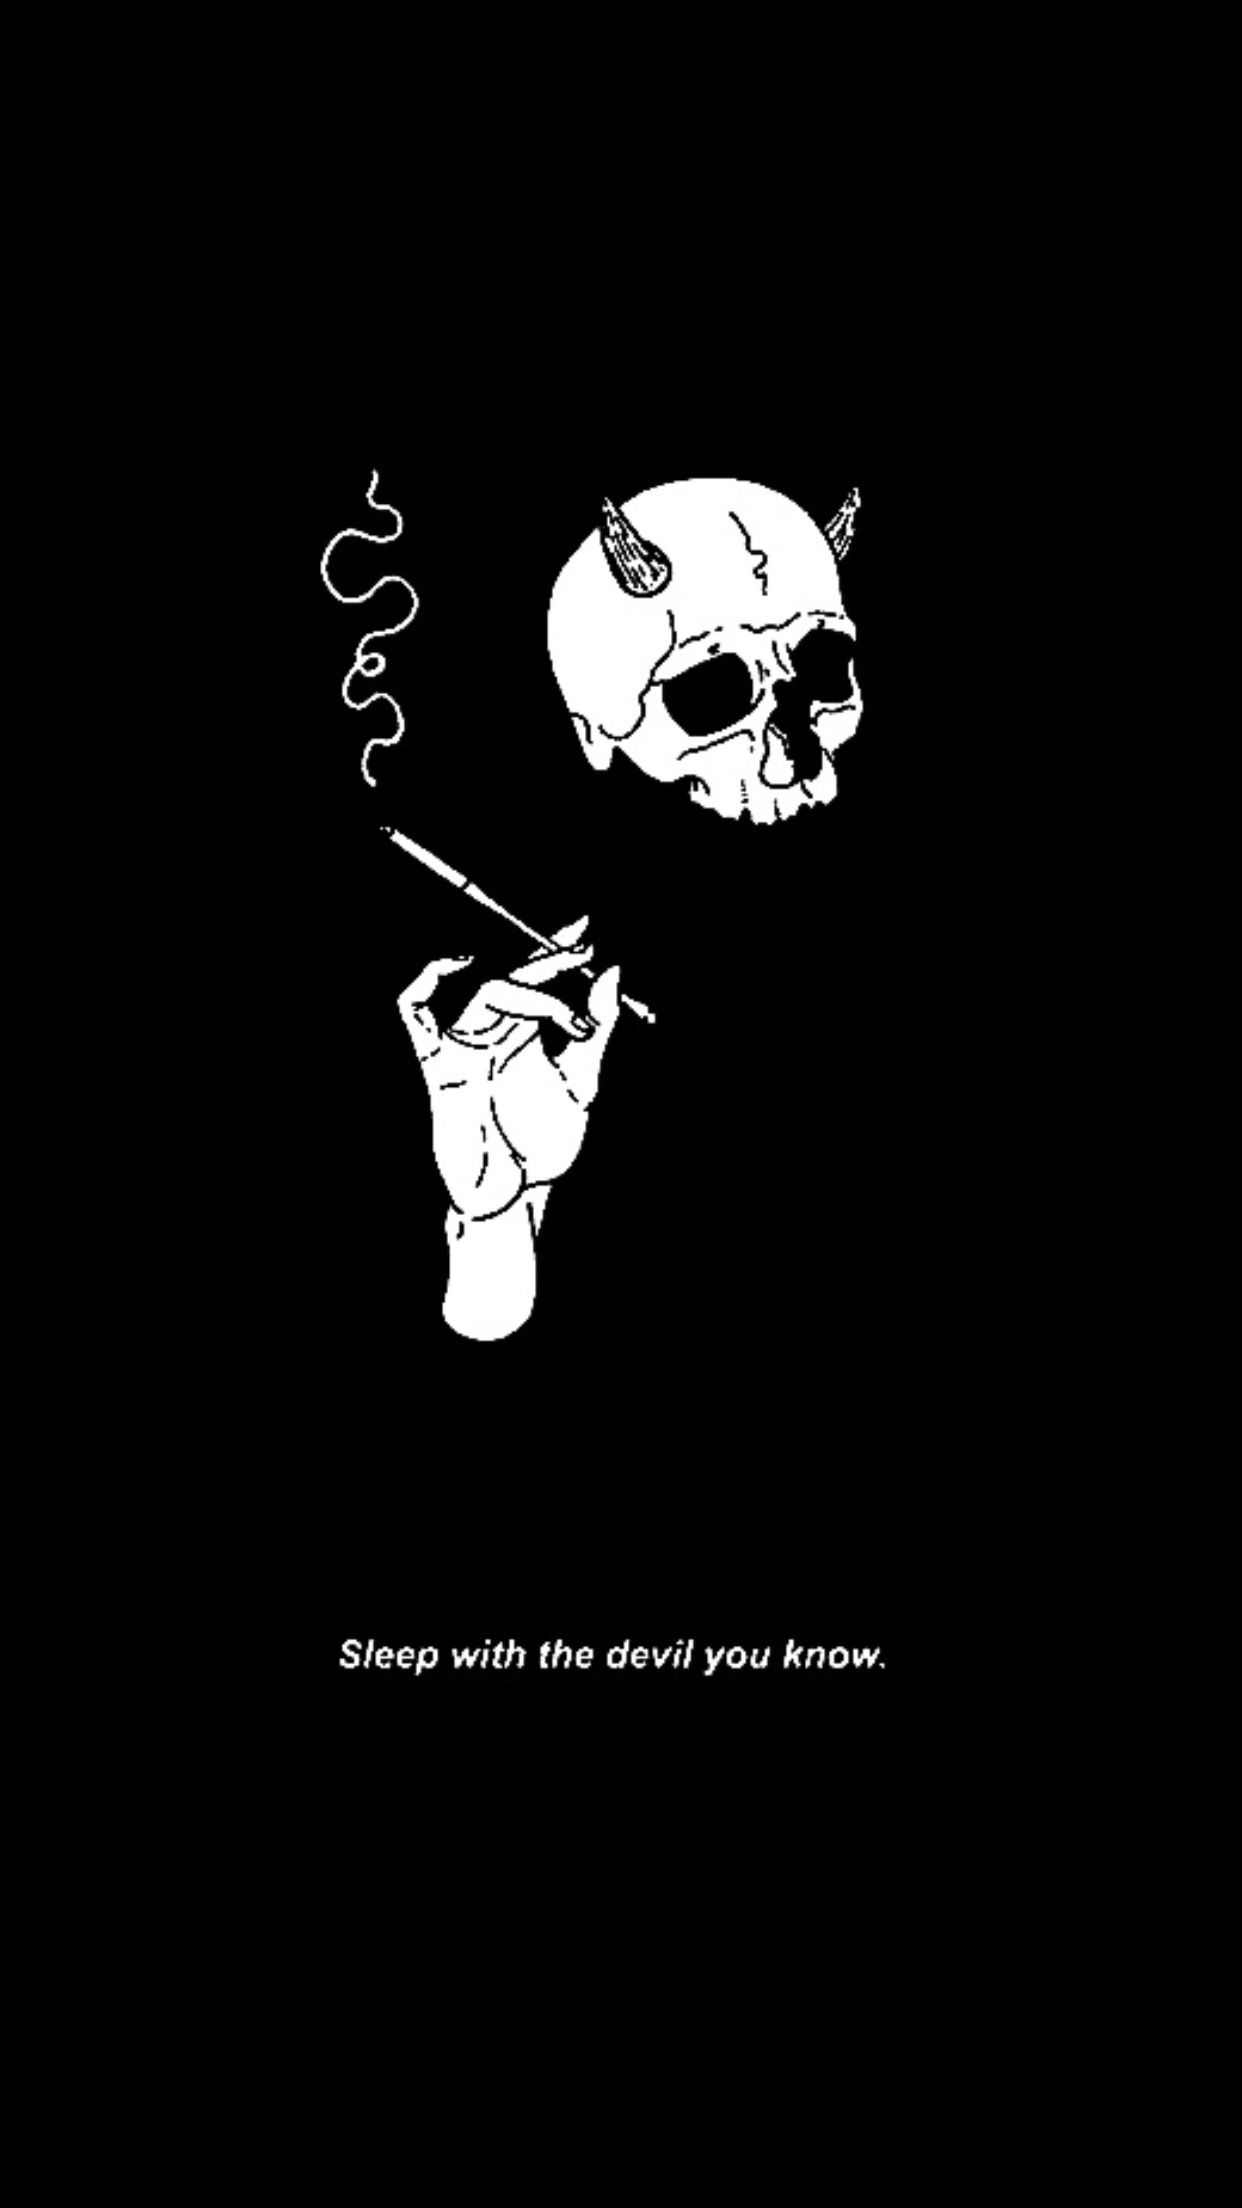 A black and white image of the devil smoking - Skull, skeleton